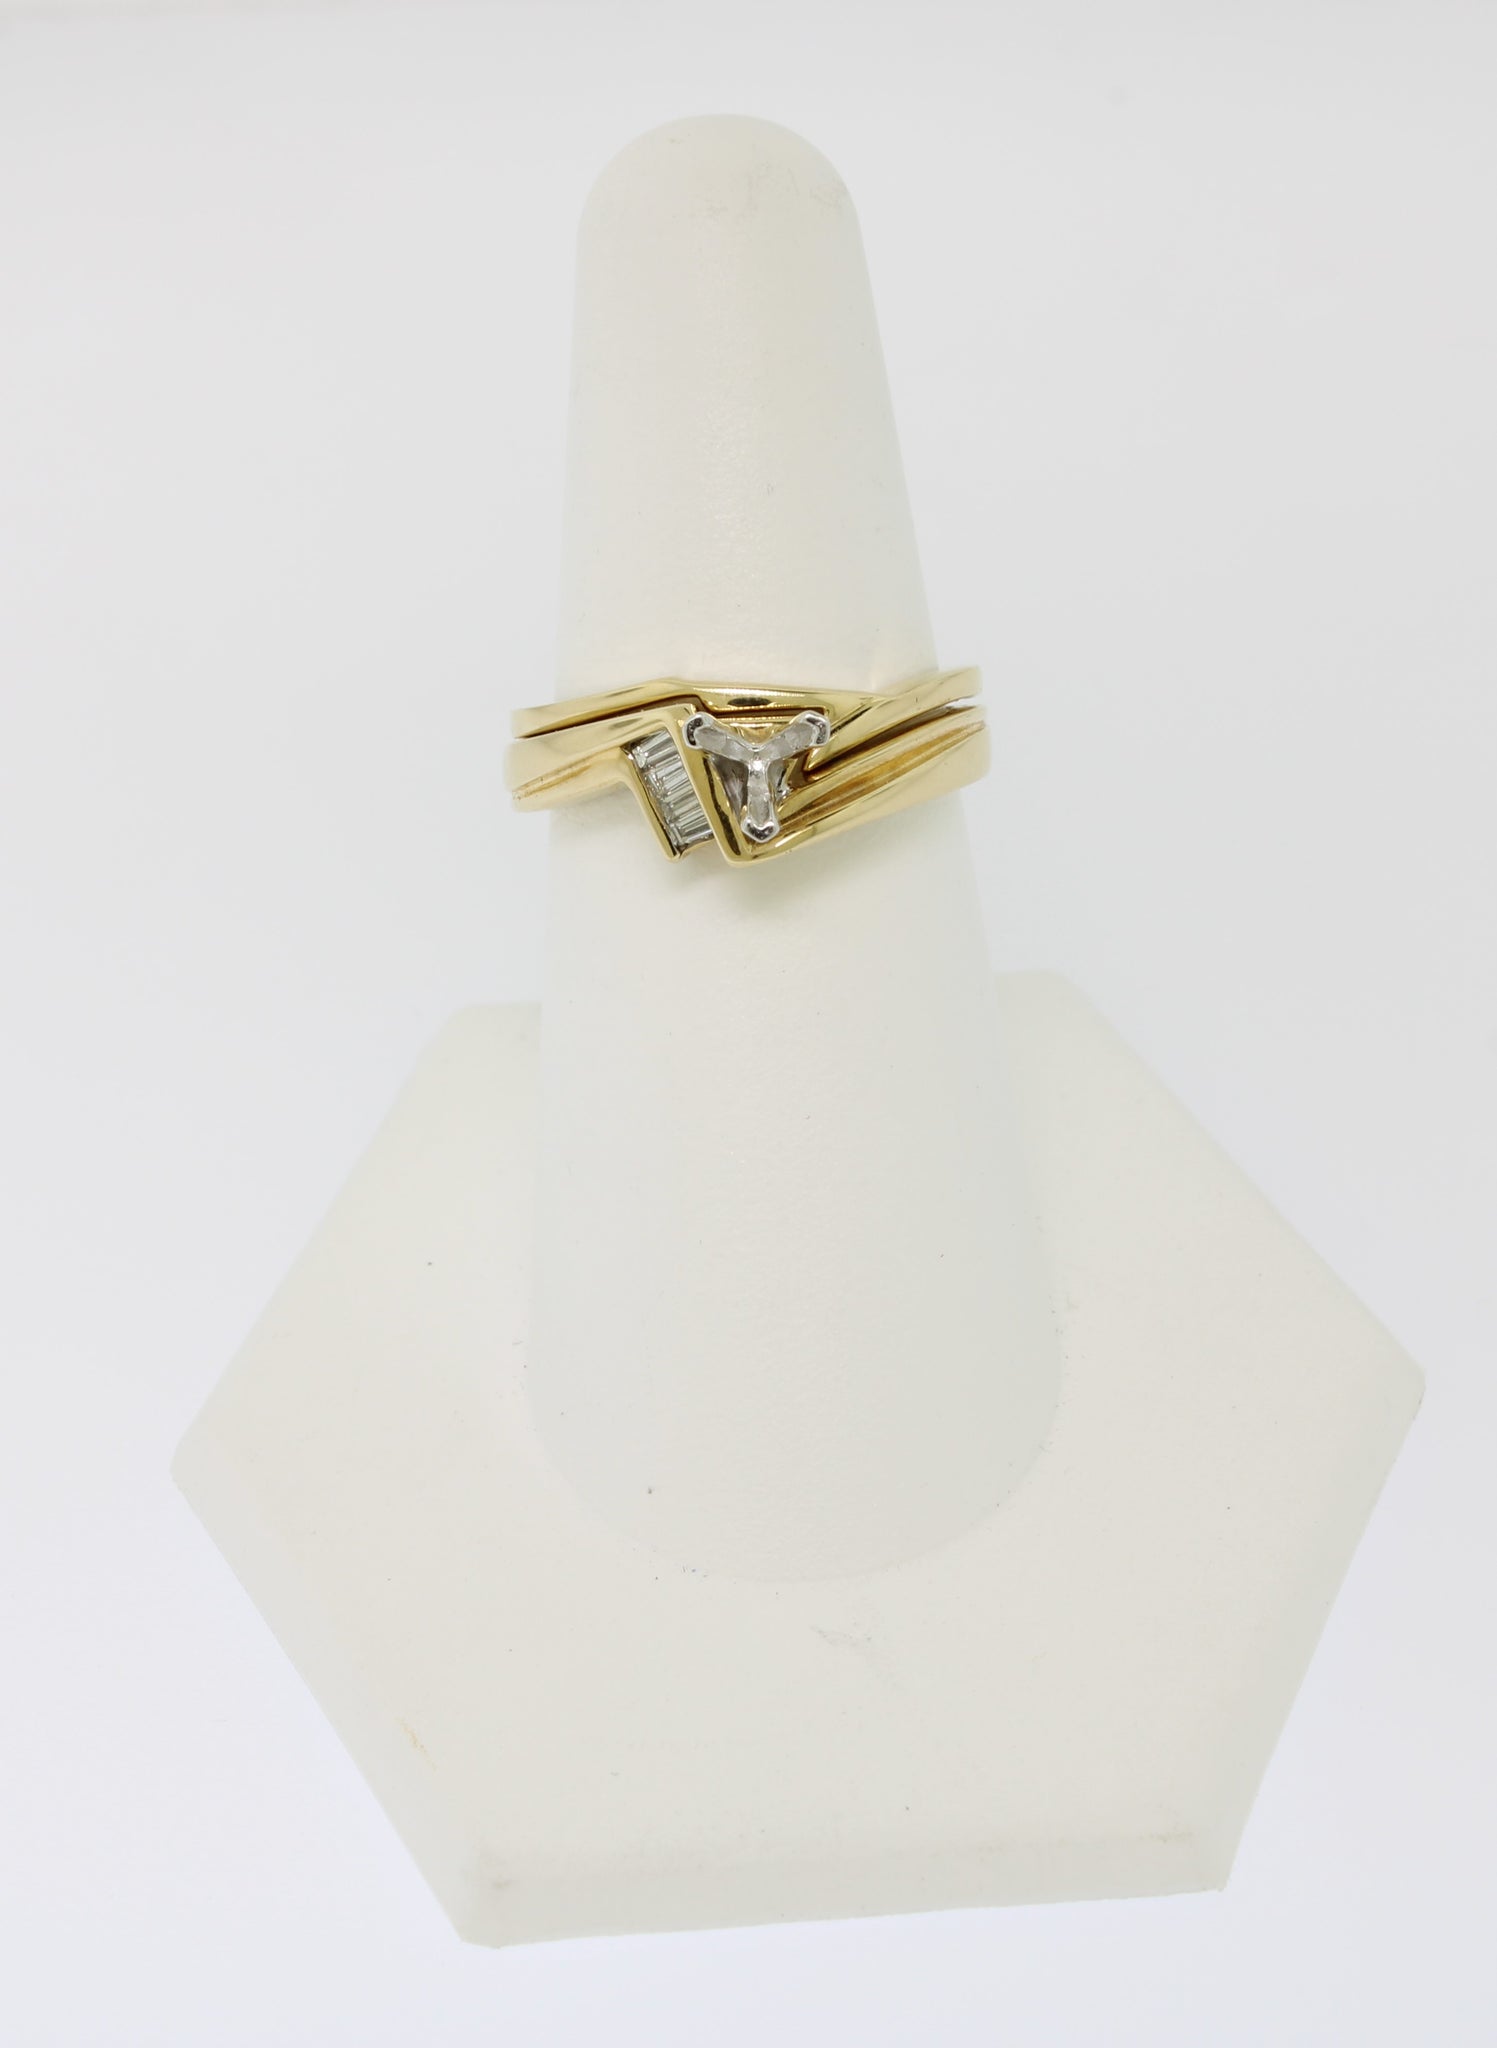 14k Yellow Gold Diamond Wedding Set Complimentary Mounting Size 7